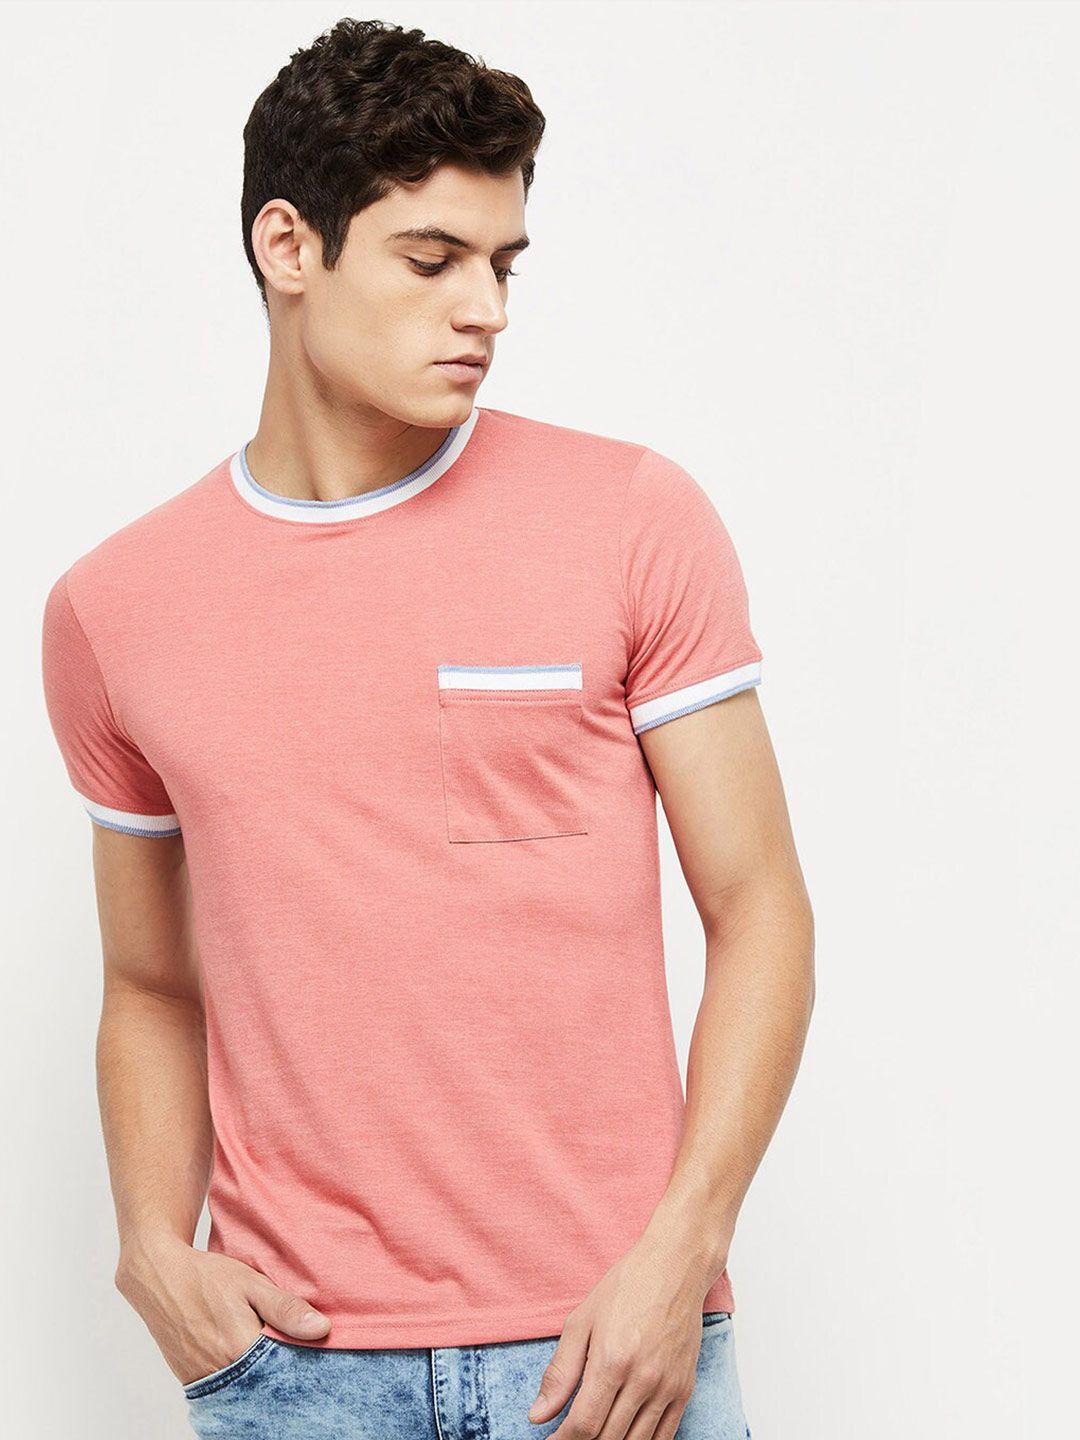 max-men-pink-t-shirt